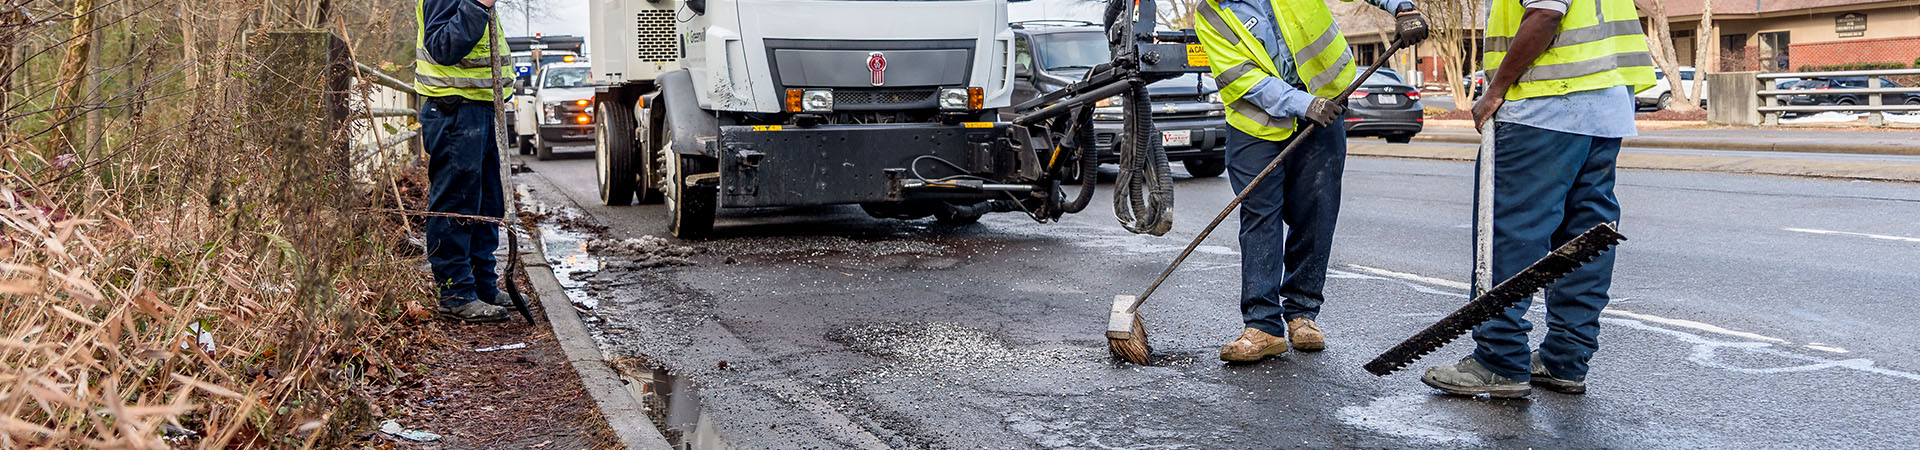 Street repair of a pothole